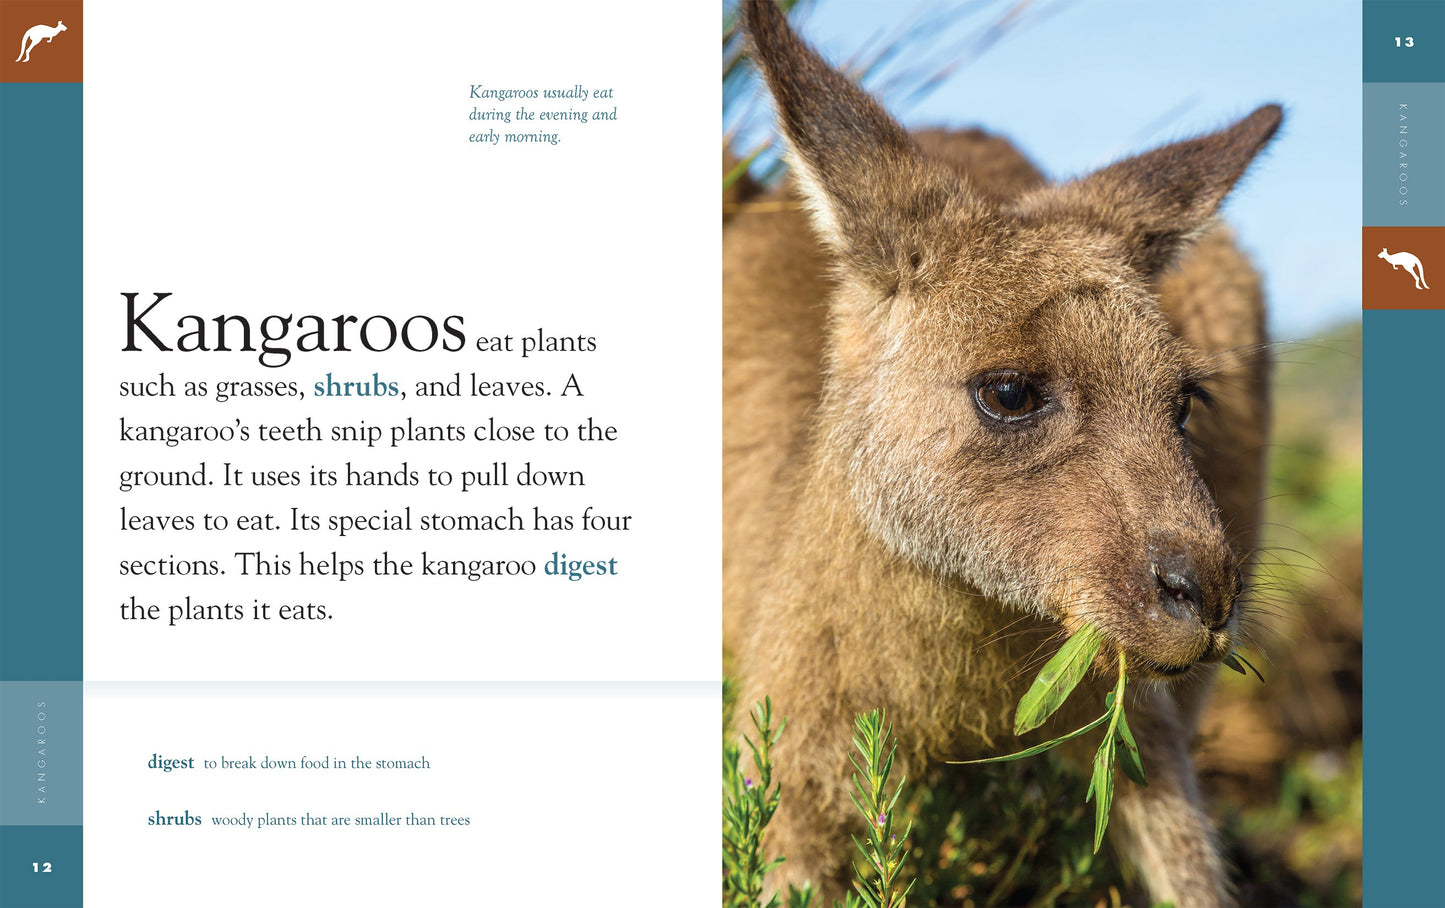 Amazing Animals - New Edition: Kangaroos by The Creative Company Shop